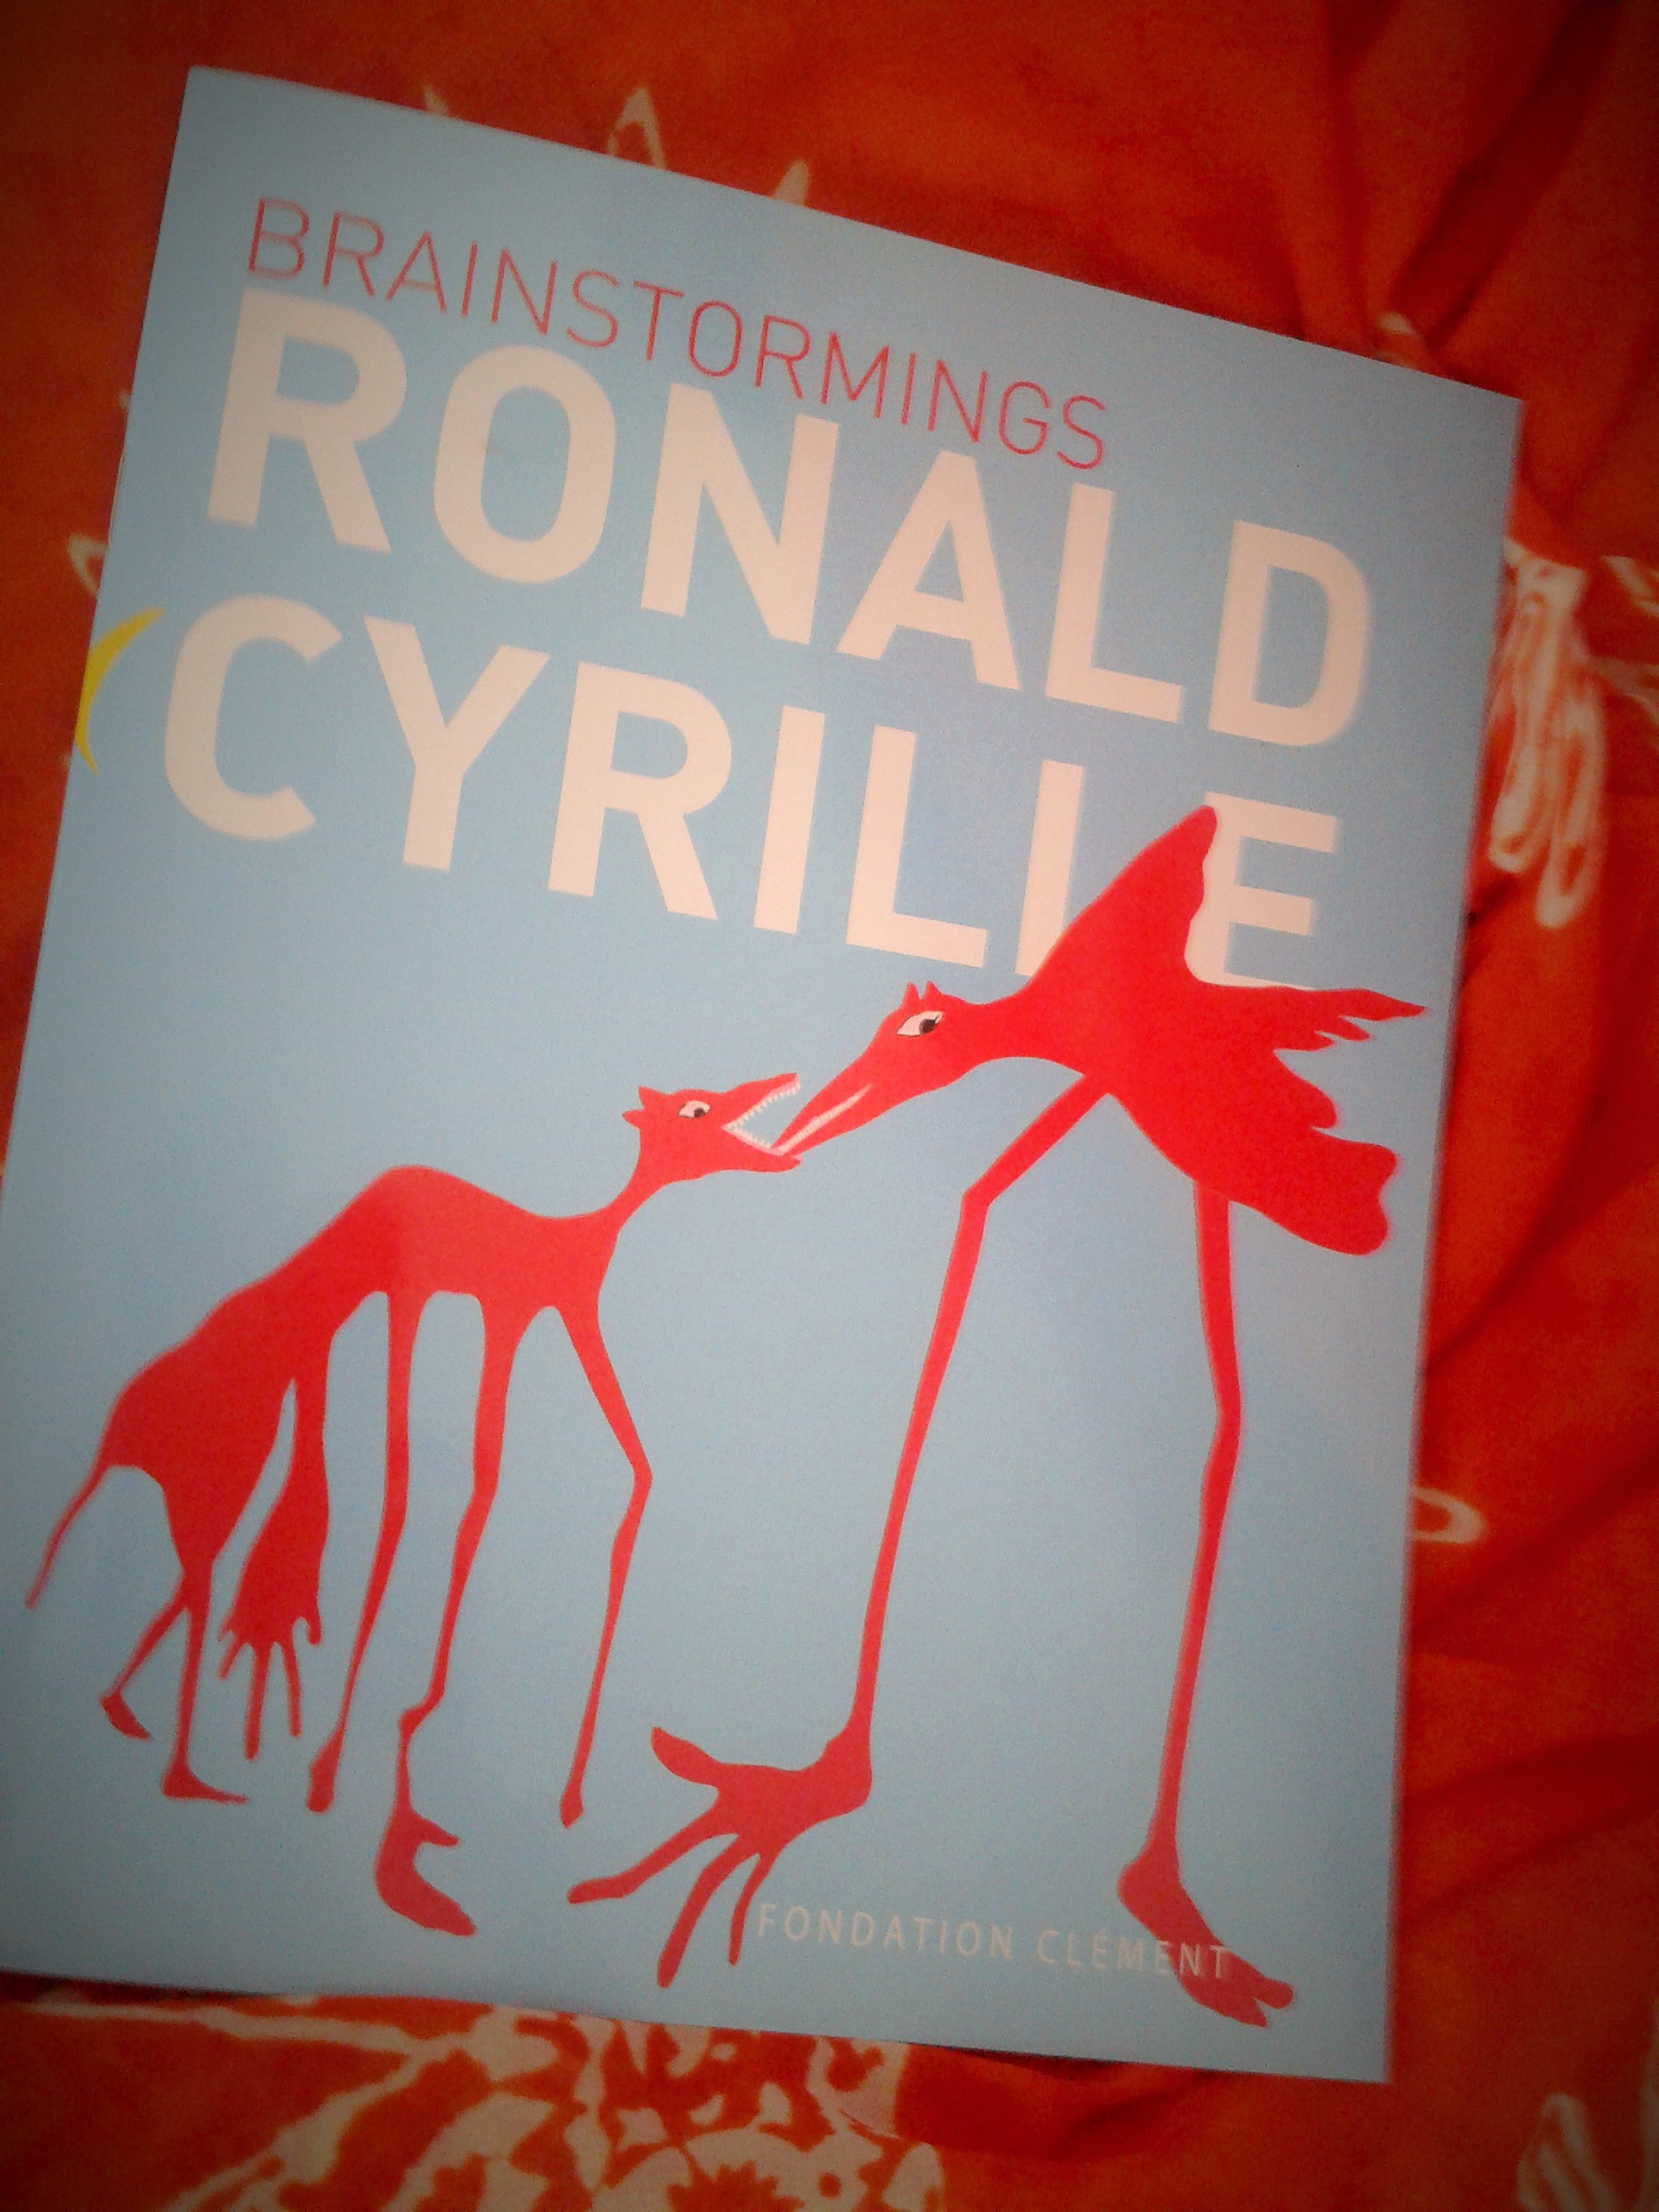 ronald cyrille catalogue expo